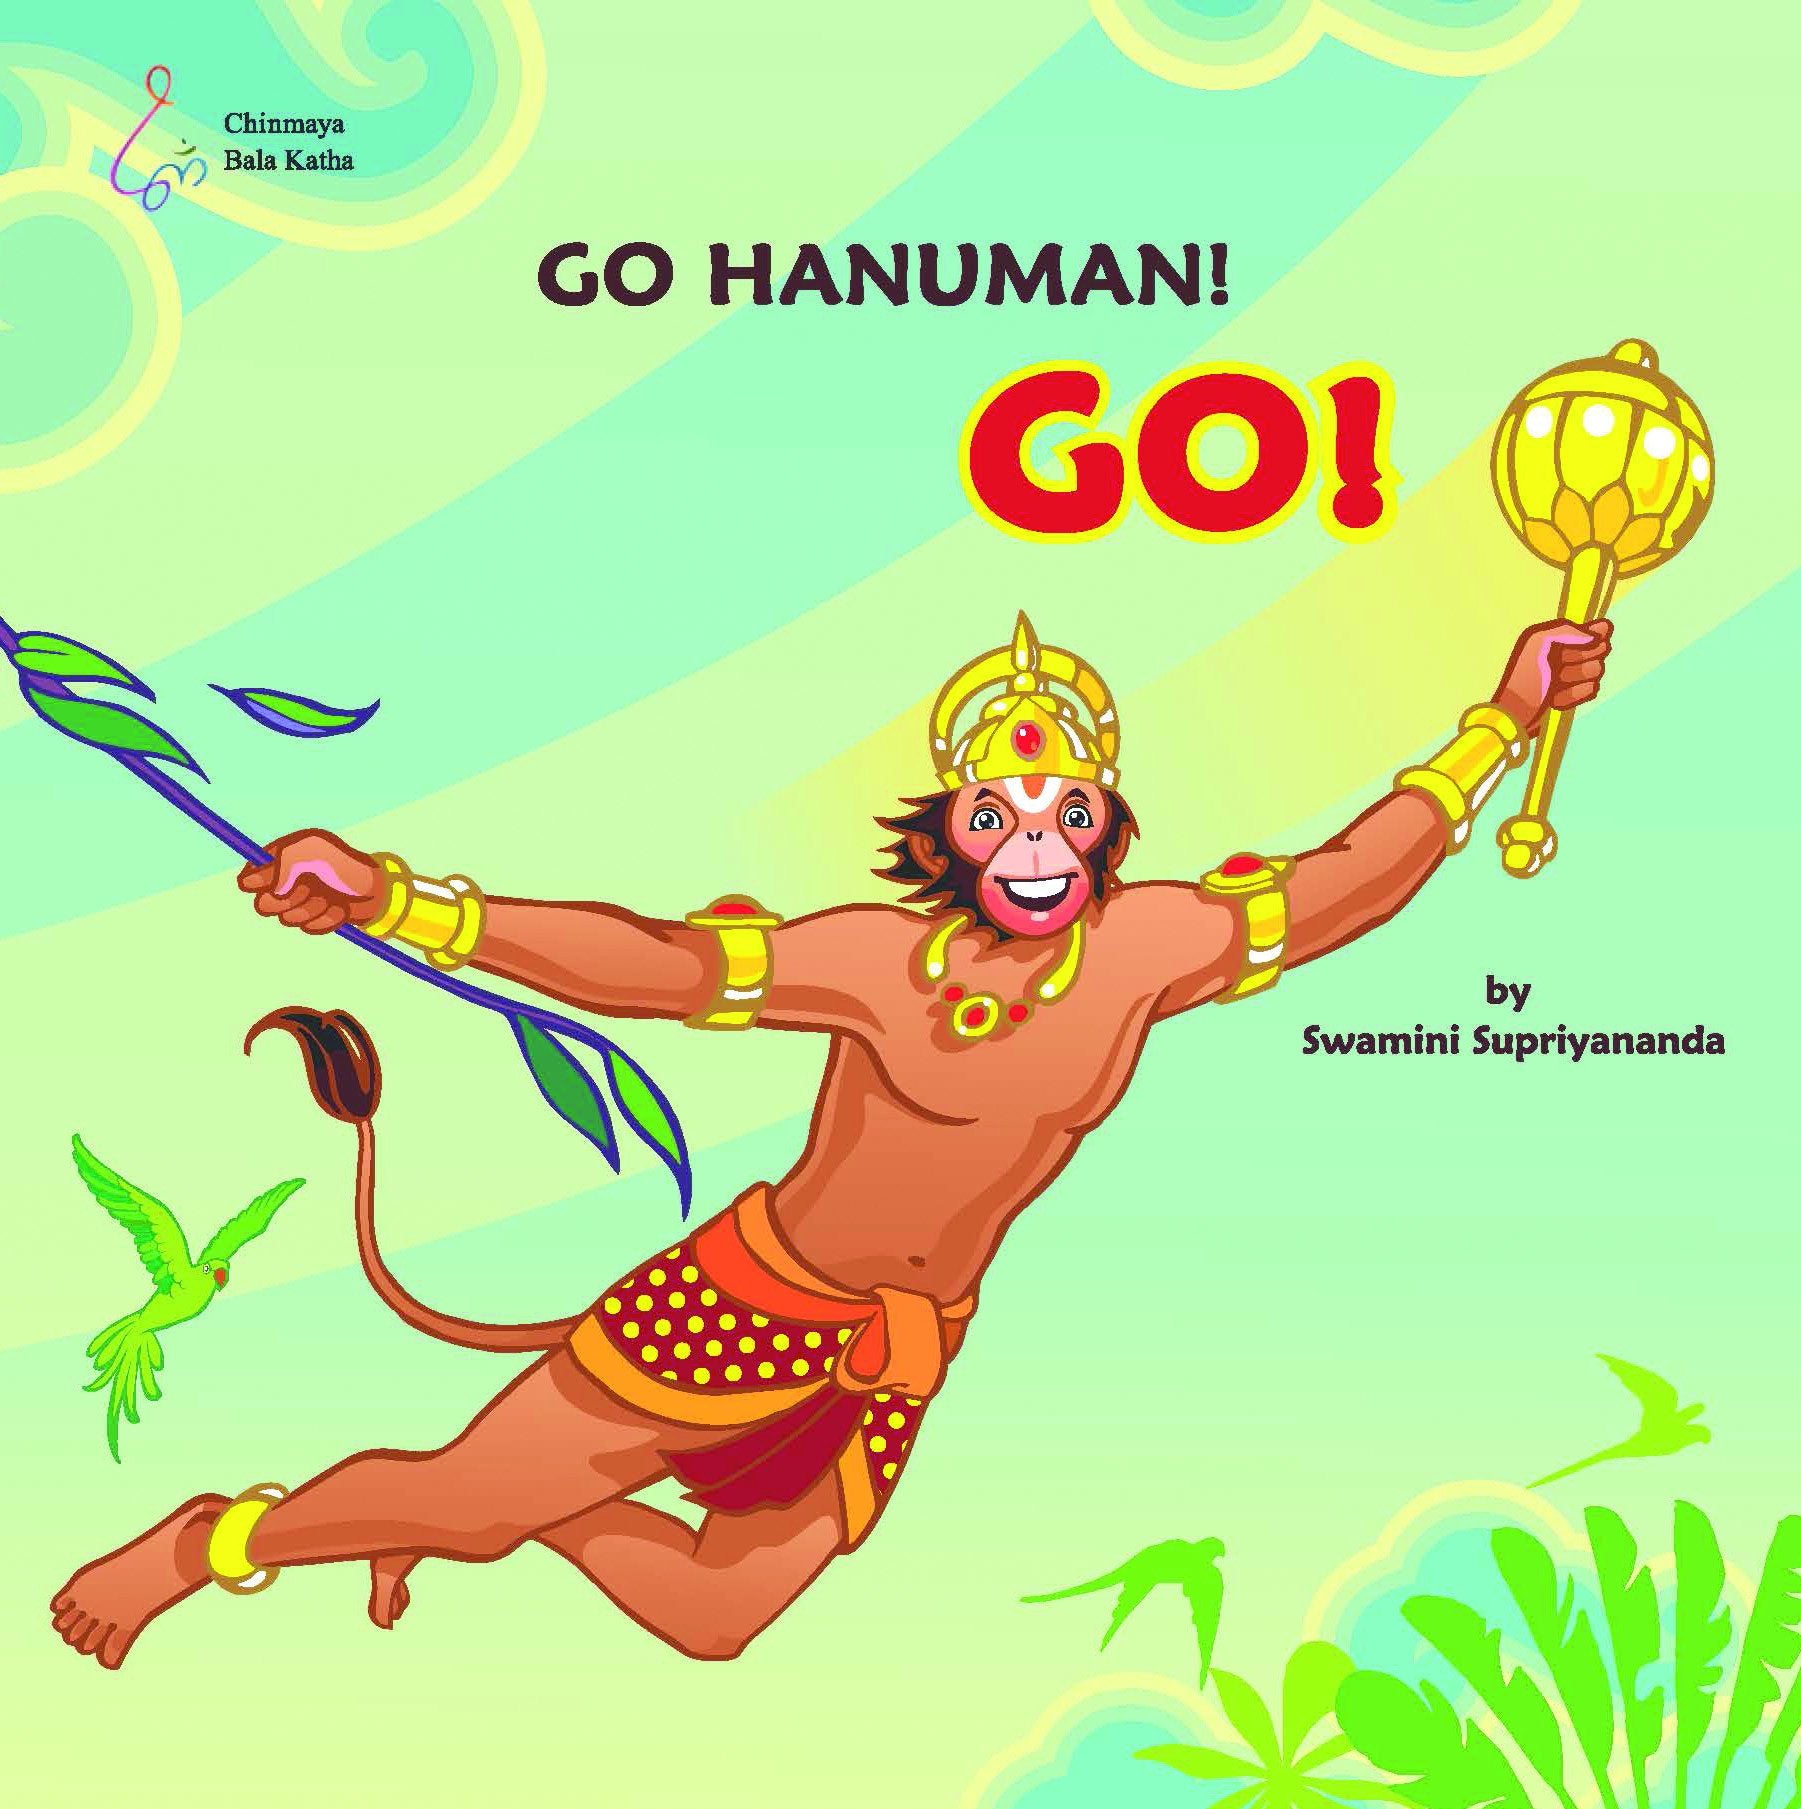 Go Hanuman! Go!